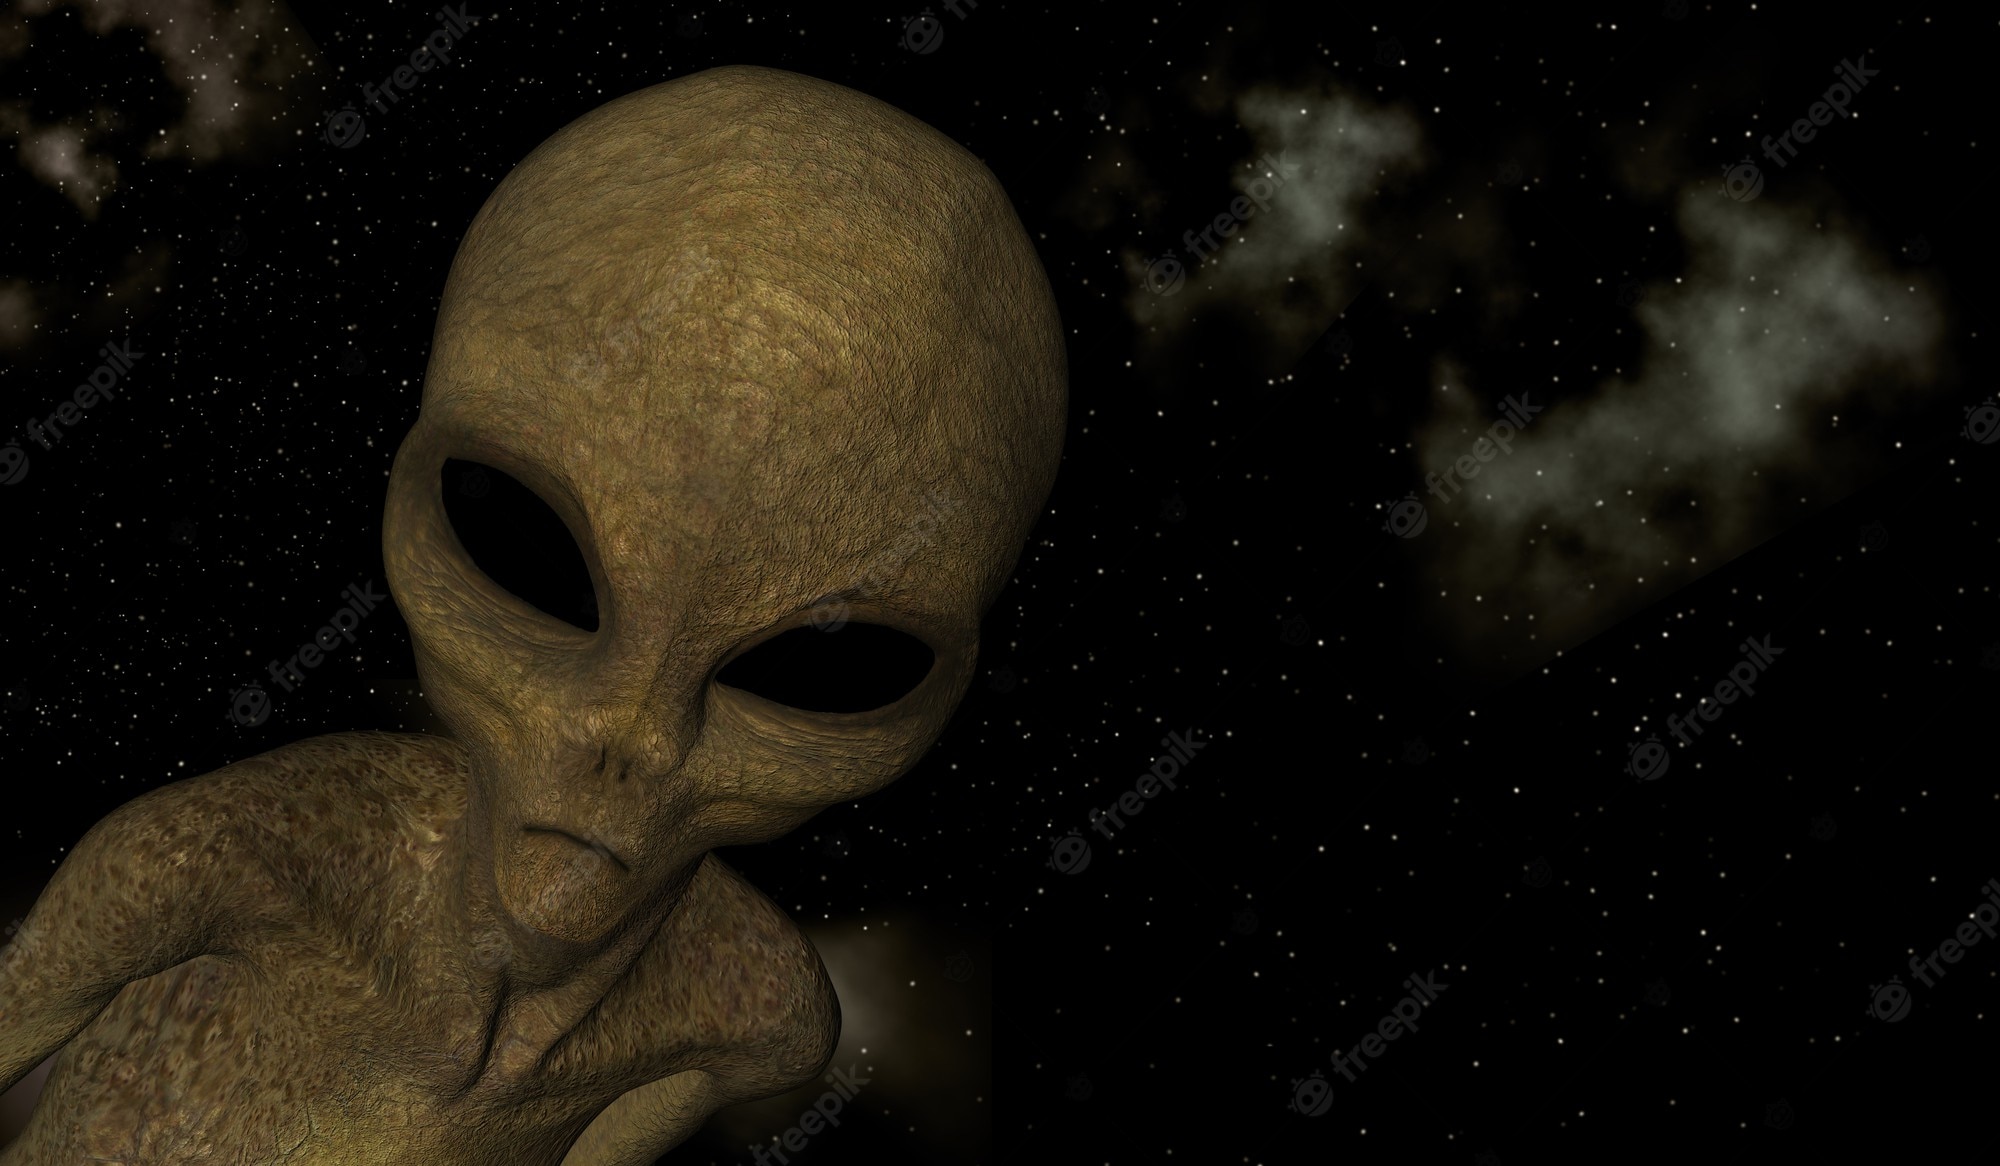 Alien Creature Image. Free Vectors, & PSD